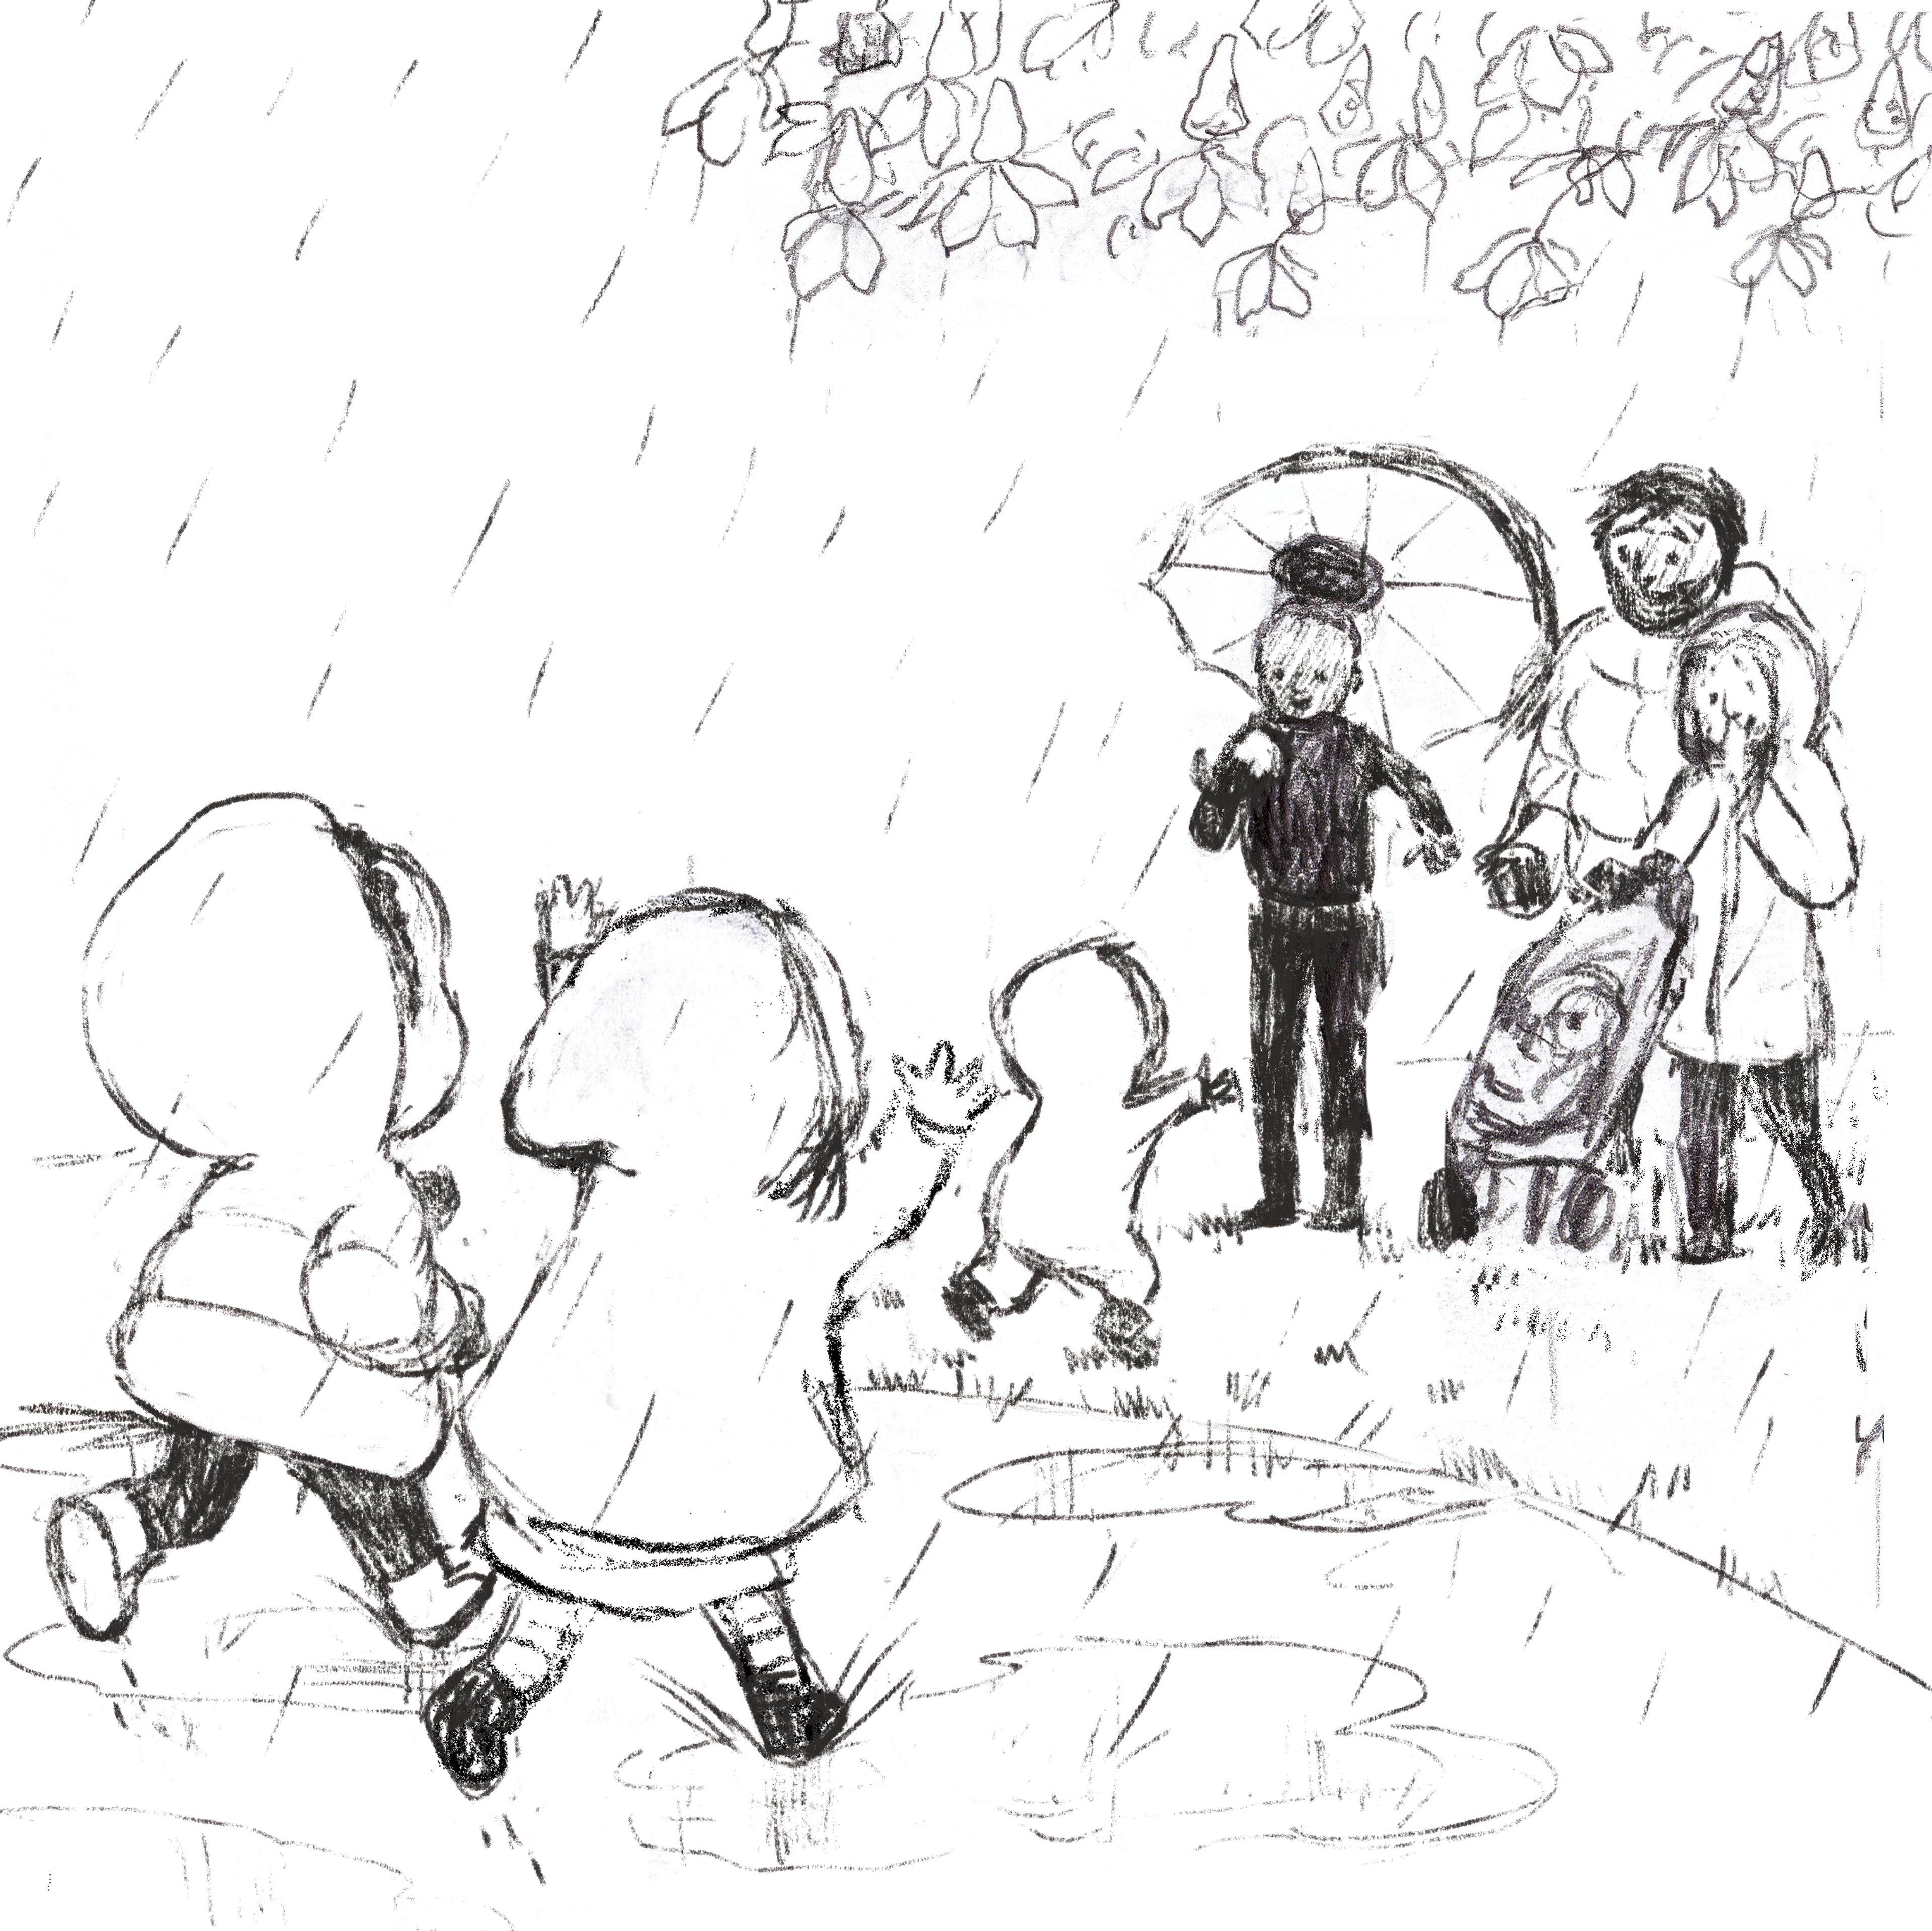 Pencil sketch of people walking in the rain